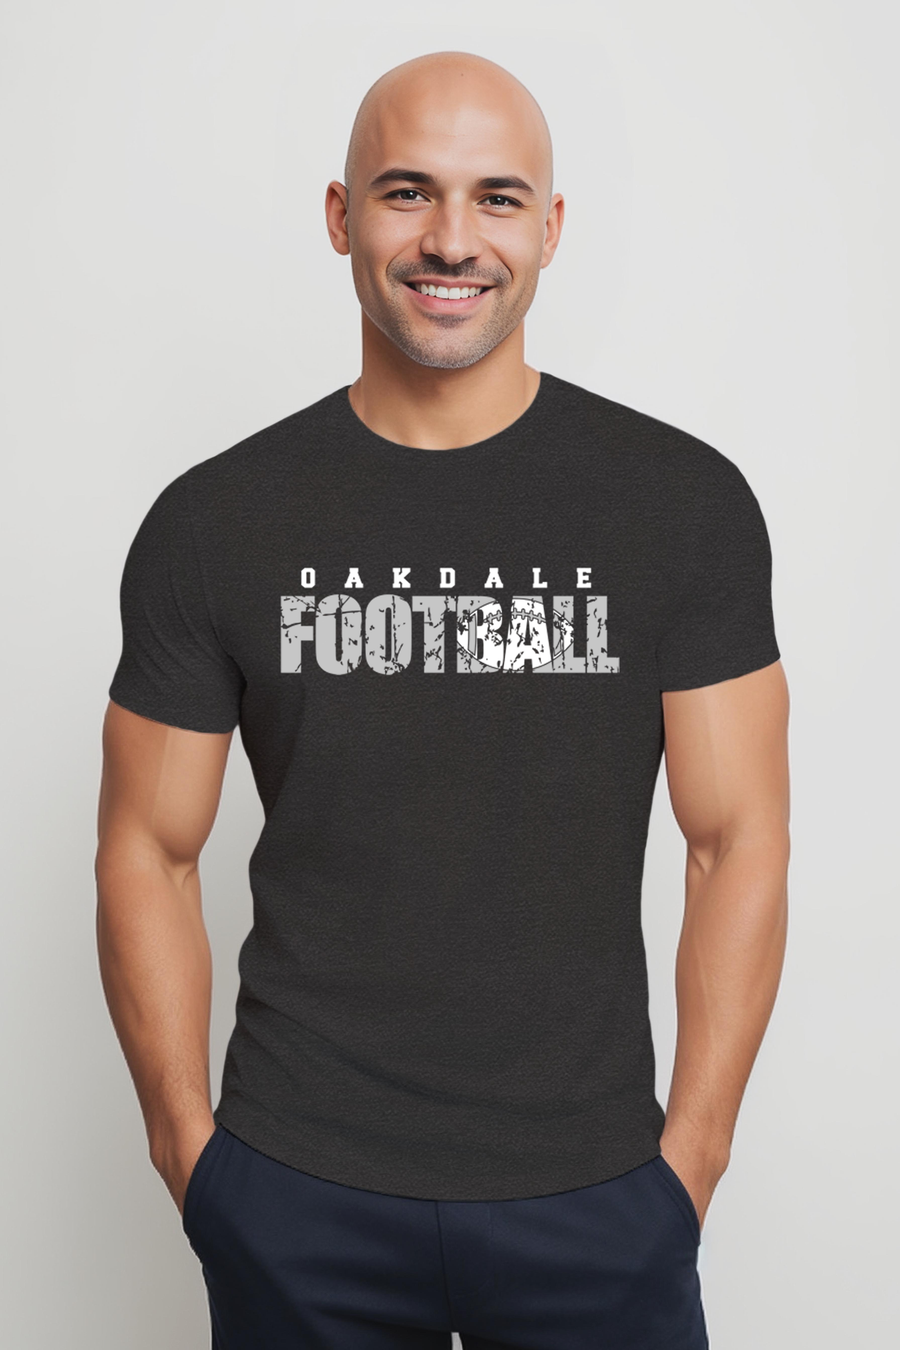 Oakdale Football- Distressed Design- Dark Gray Unisex Shirt (OMS)